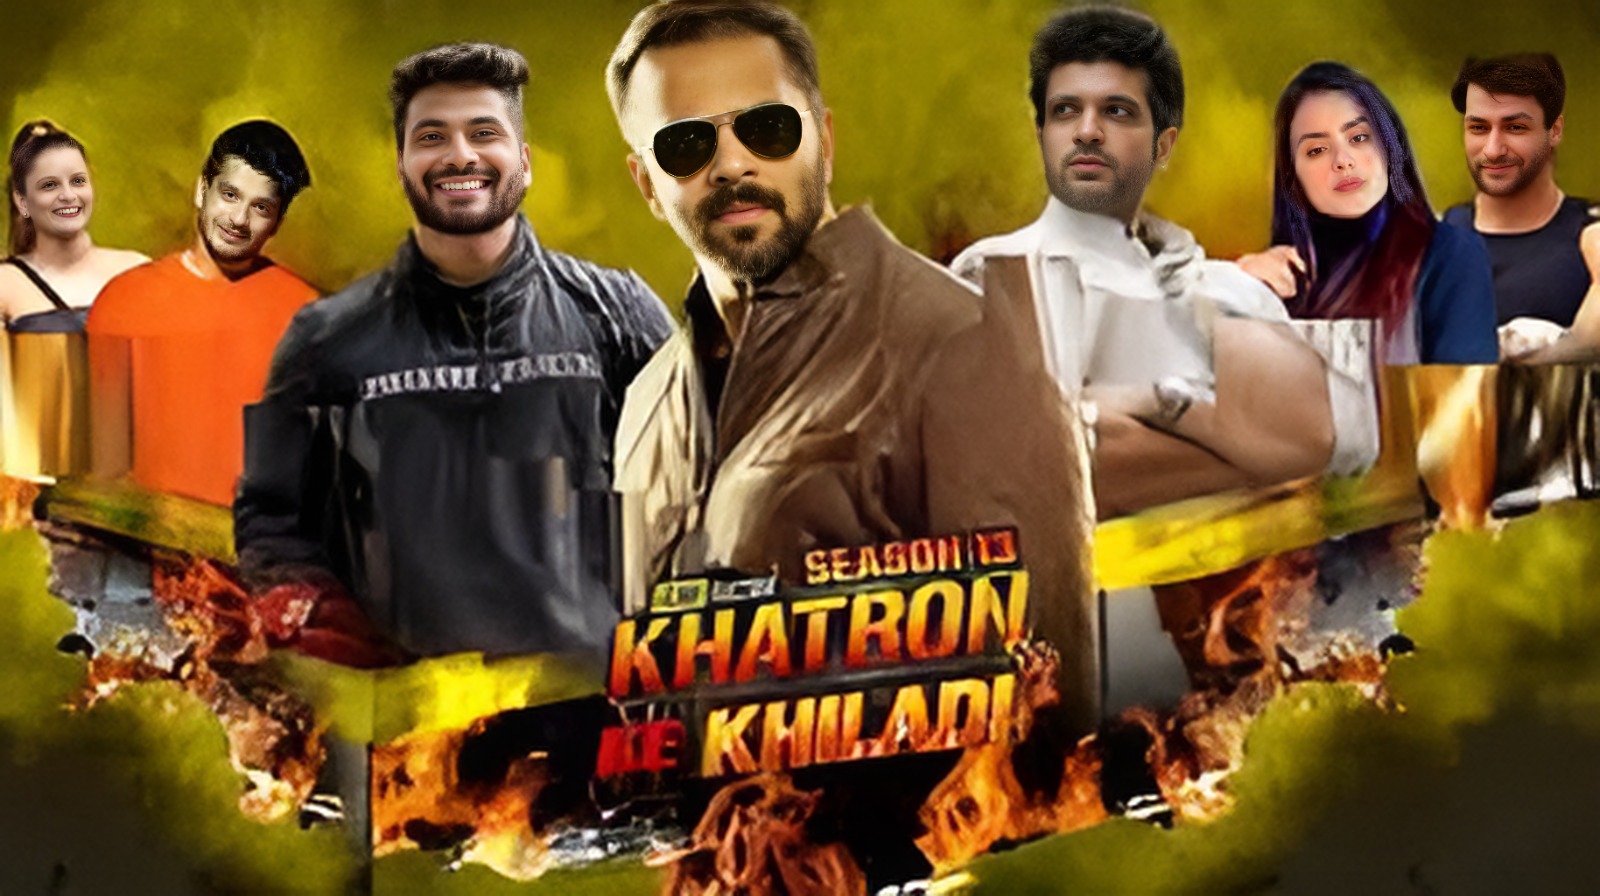 Khatron Ke Khiladi 7: Sidharth Shukla, Tanishaa Mukerji, Faisal Khan, Sana  Saeed - here's a look at the line up! - Bollywood News & Gossip, Movie  Reviews, Trailers & Videos at Bollywoodlife.com